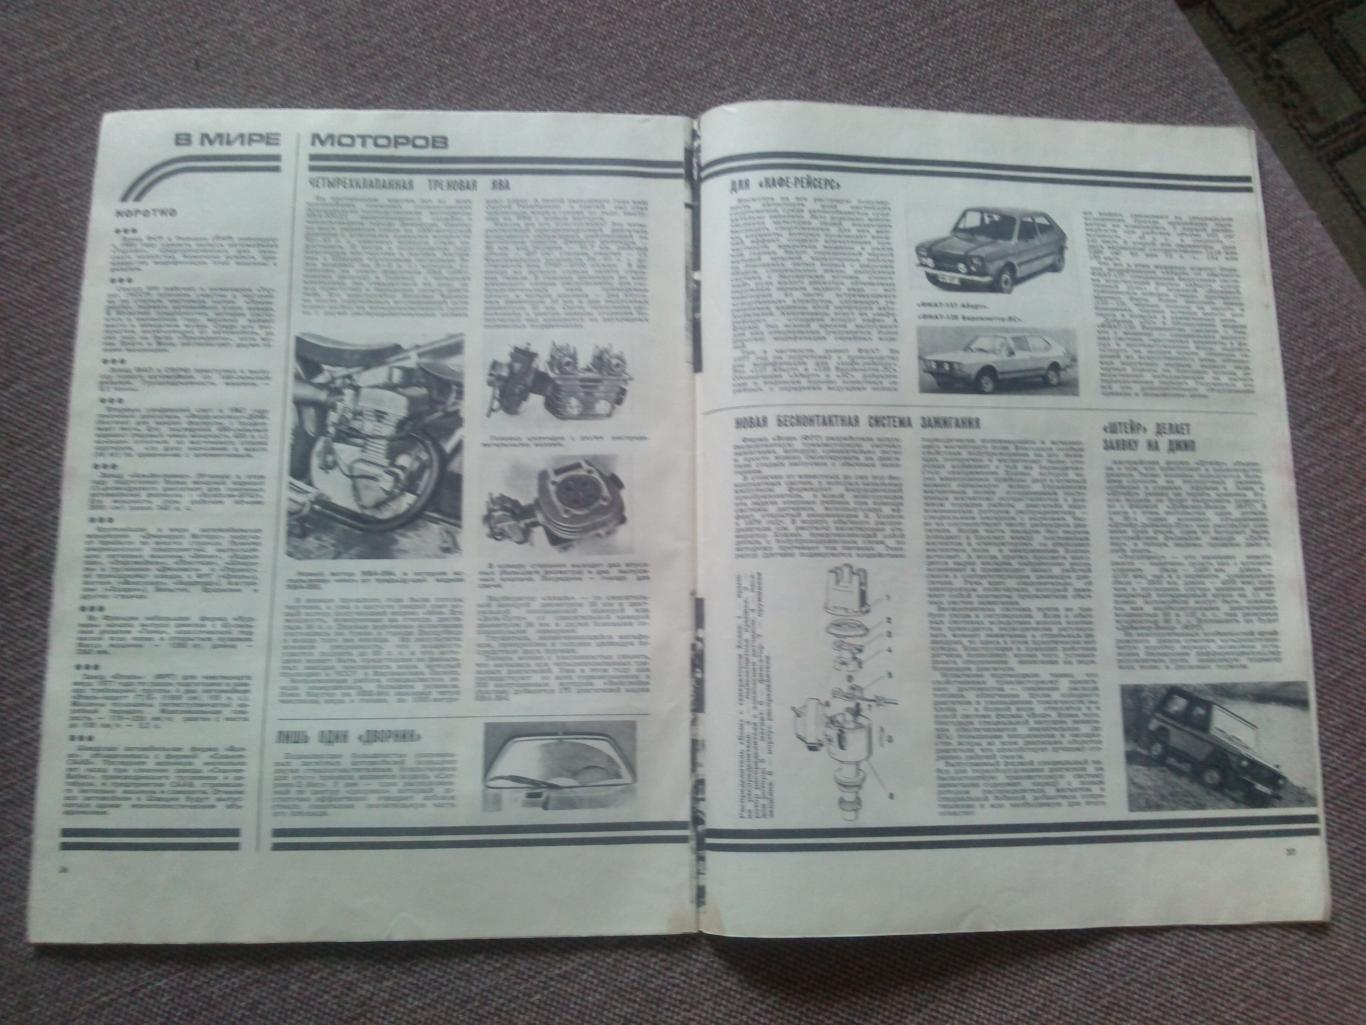 Журнал СССР :За рулем№ 10 ( октябрь ) 1977 г. (Автомобиль , транспорт) 3